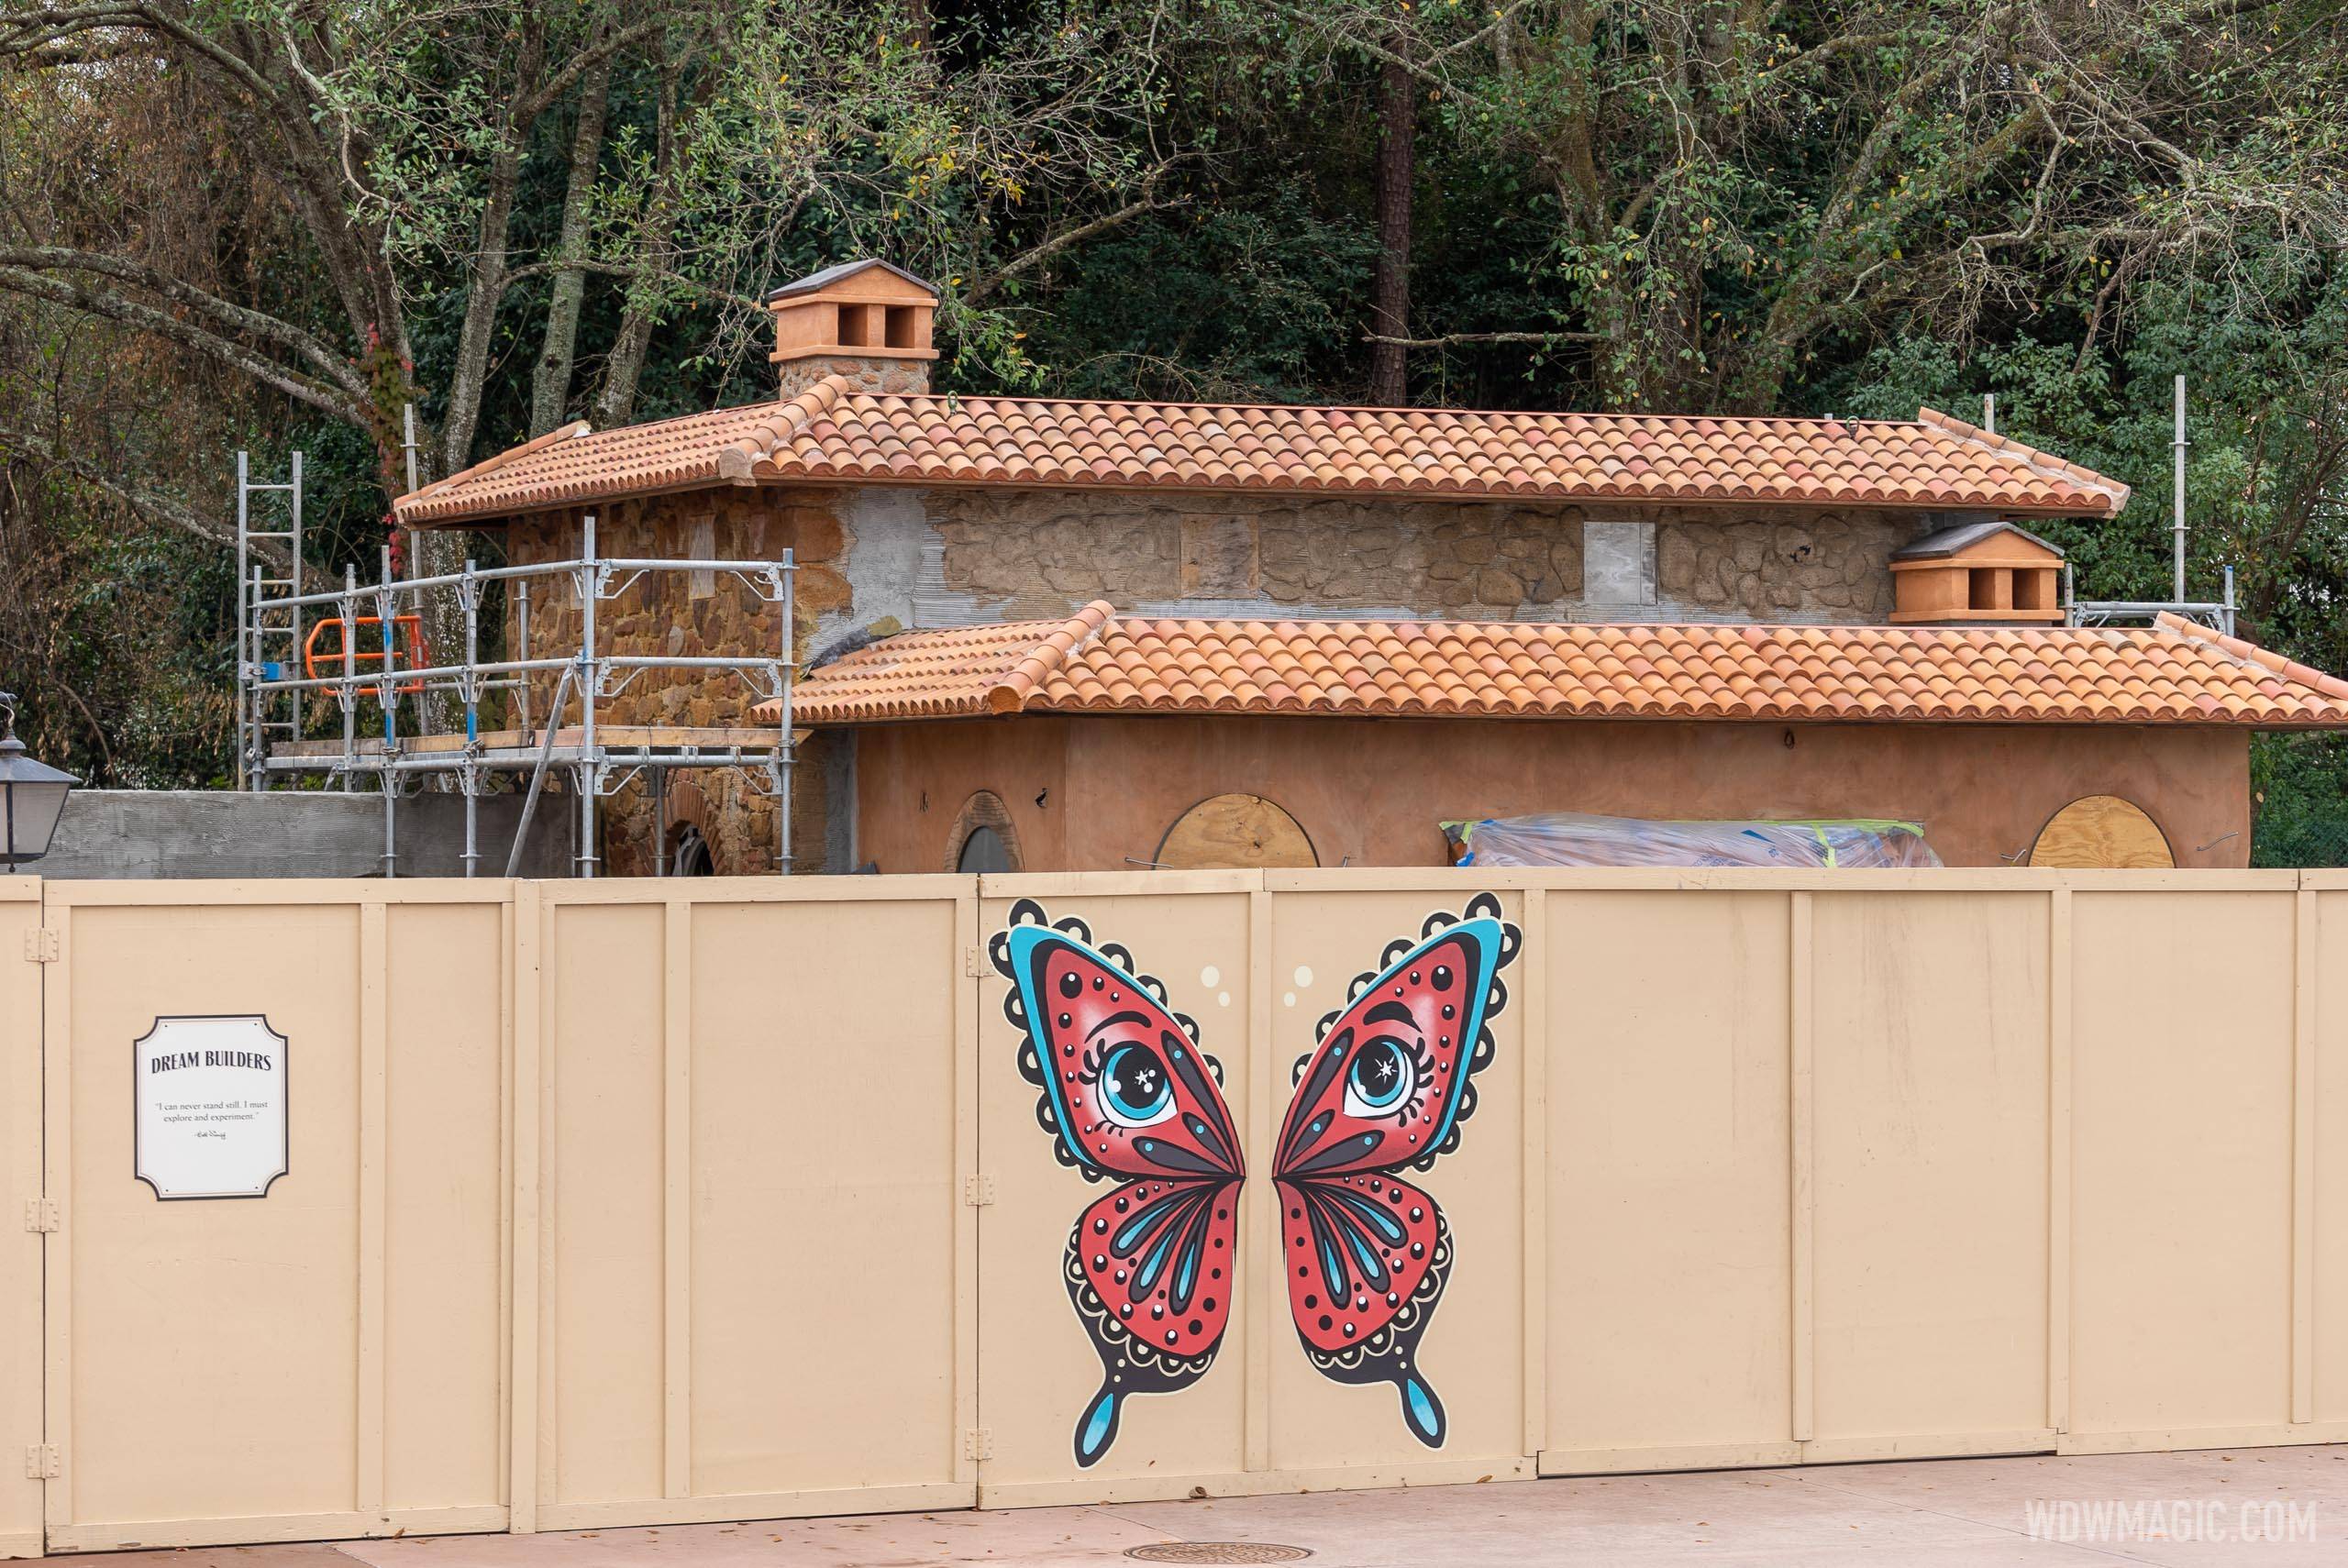 PHOTOS - Gelateria Toscana construction at EPCOT's Italy pavilion